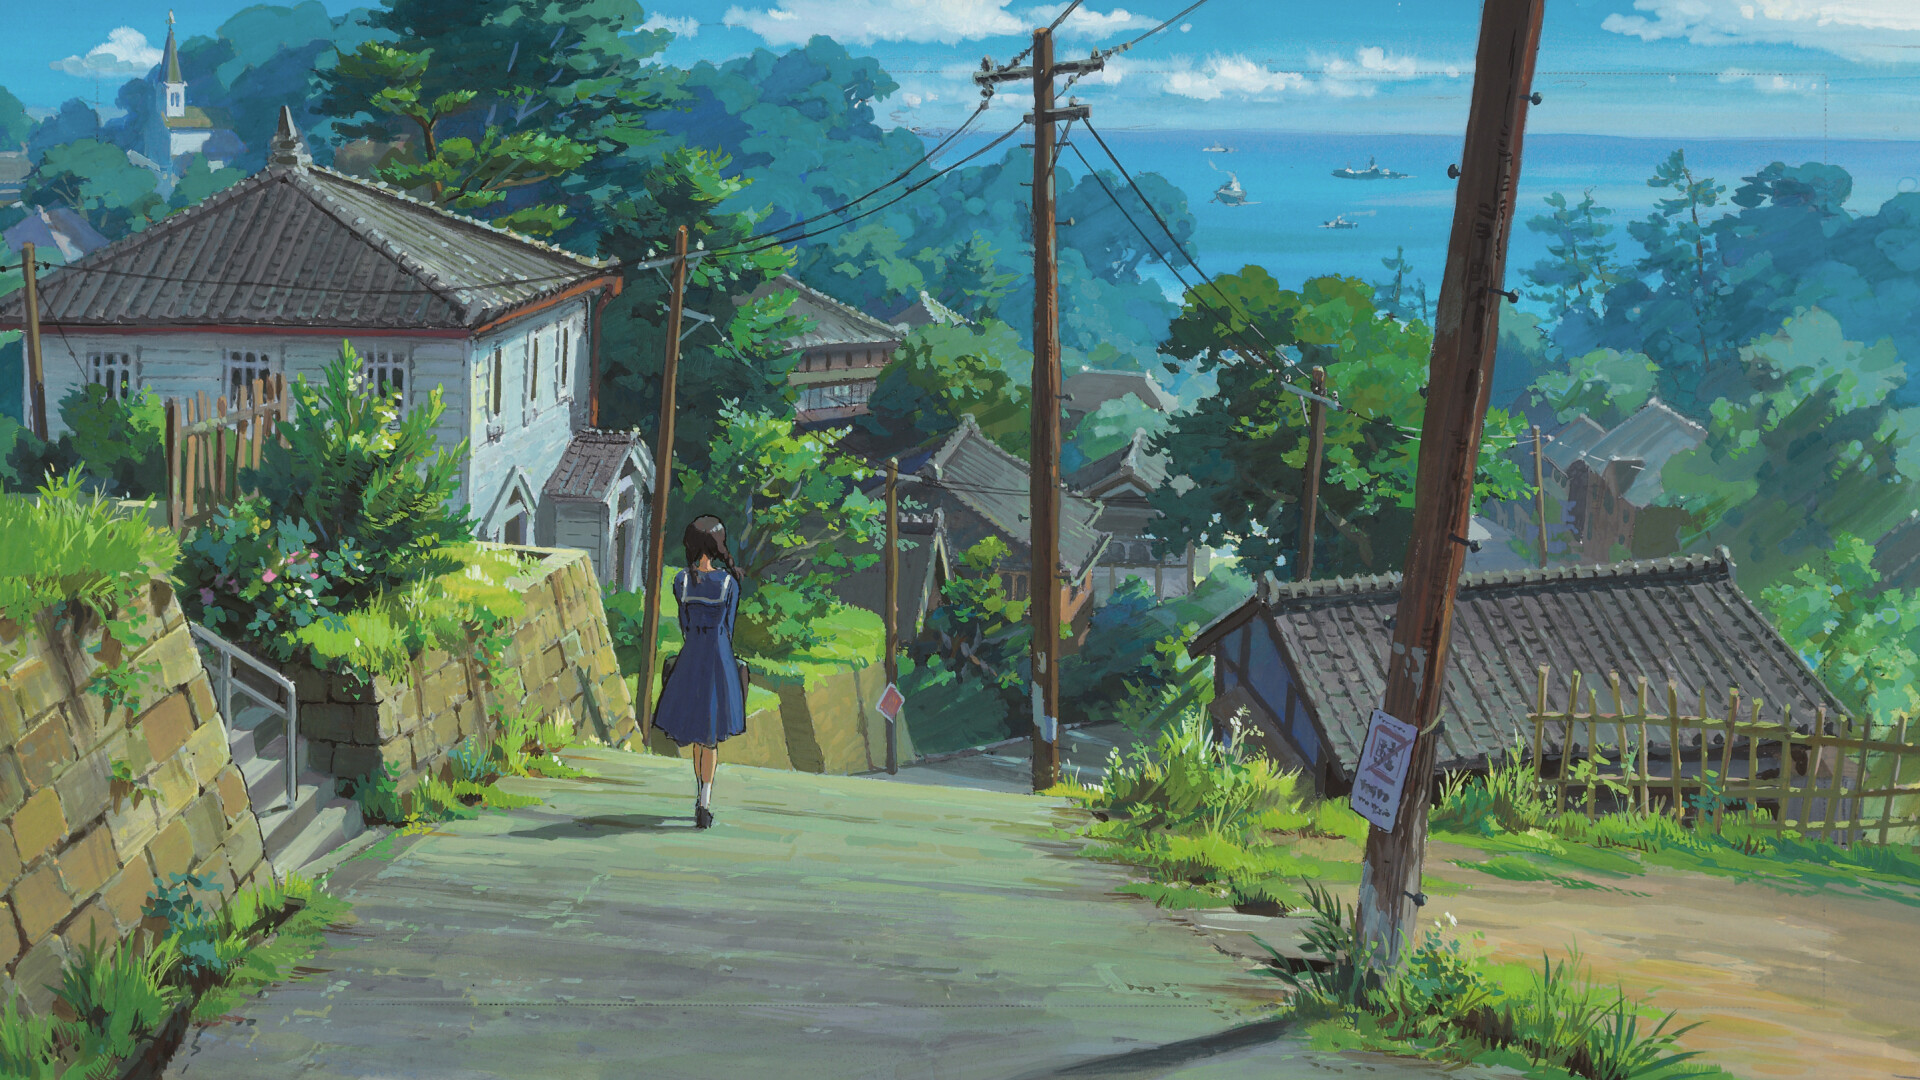 Studio Ghibli: The idea of Hayao Miyazaki, A Japanese animator, director, producer, screenwriter, author, and manga artist. 1920x1080 Full HD Wallpaper.